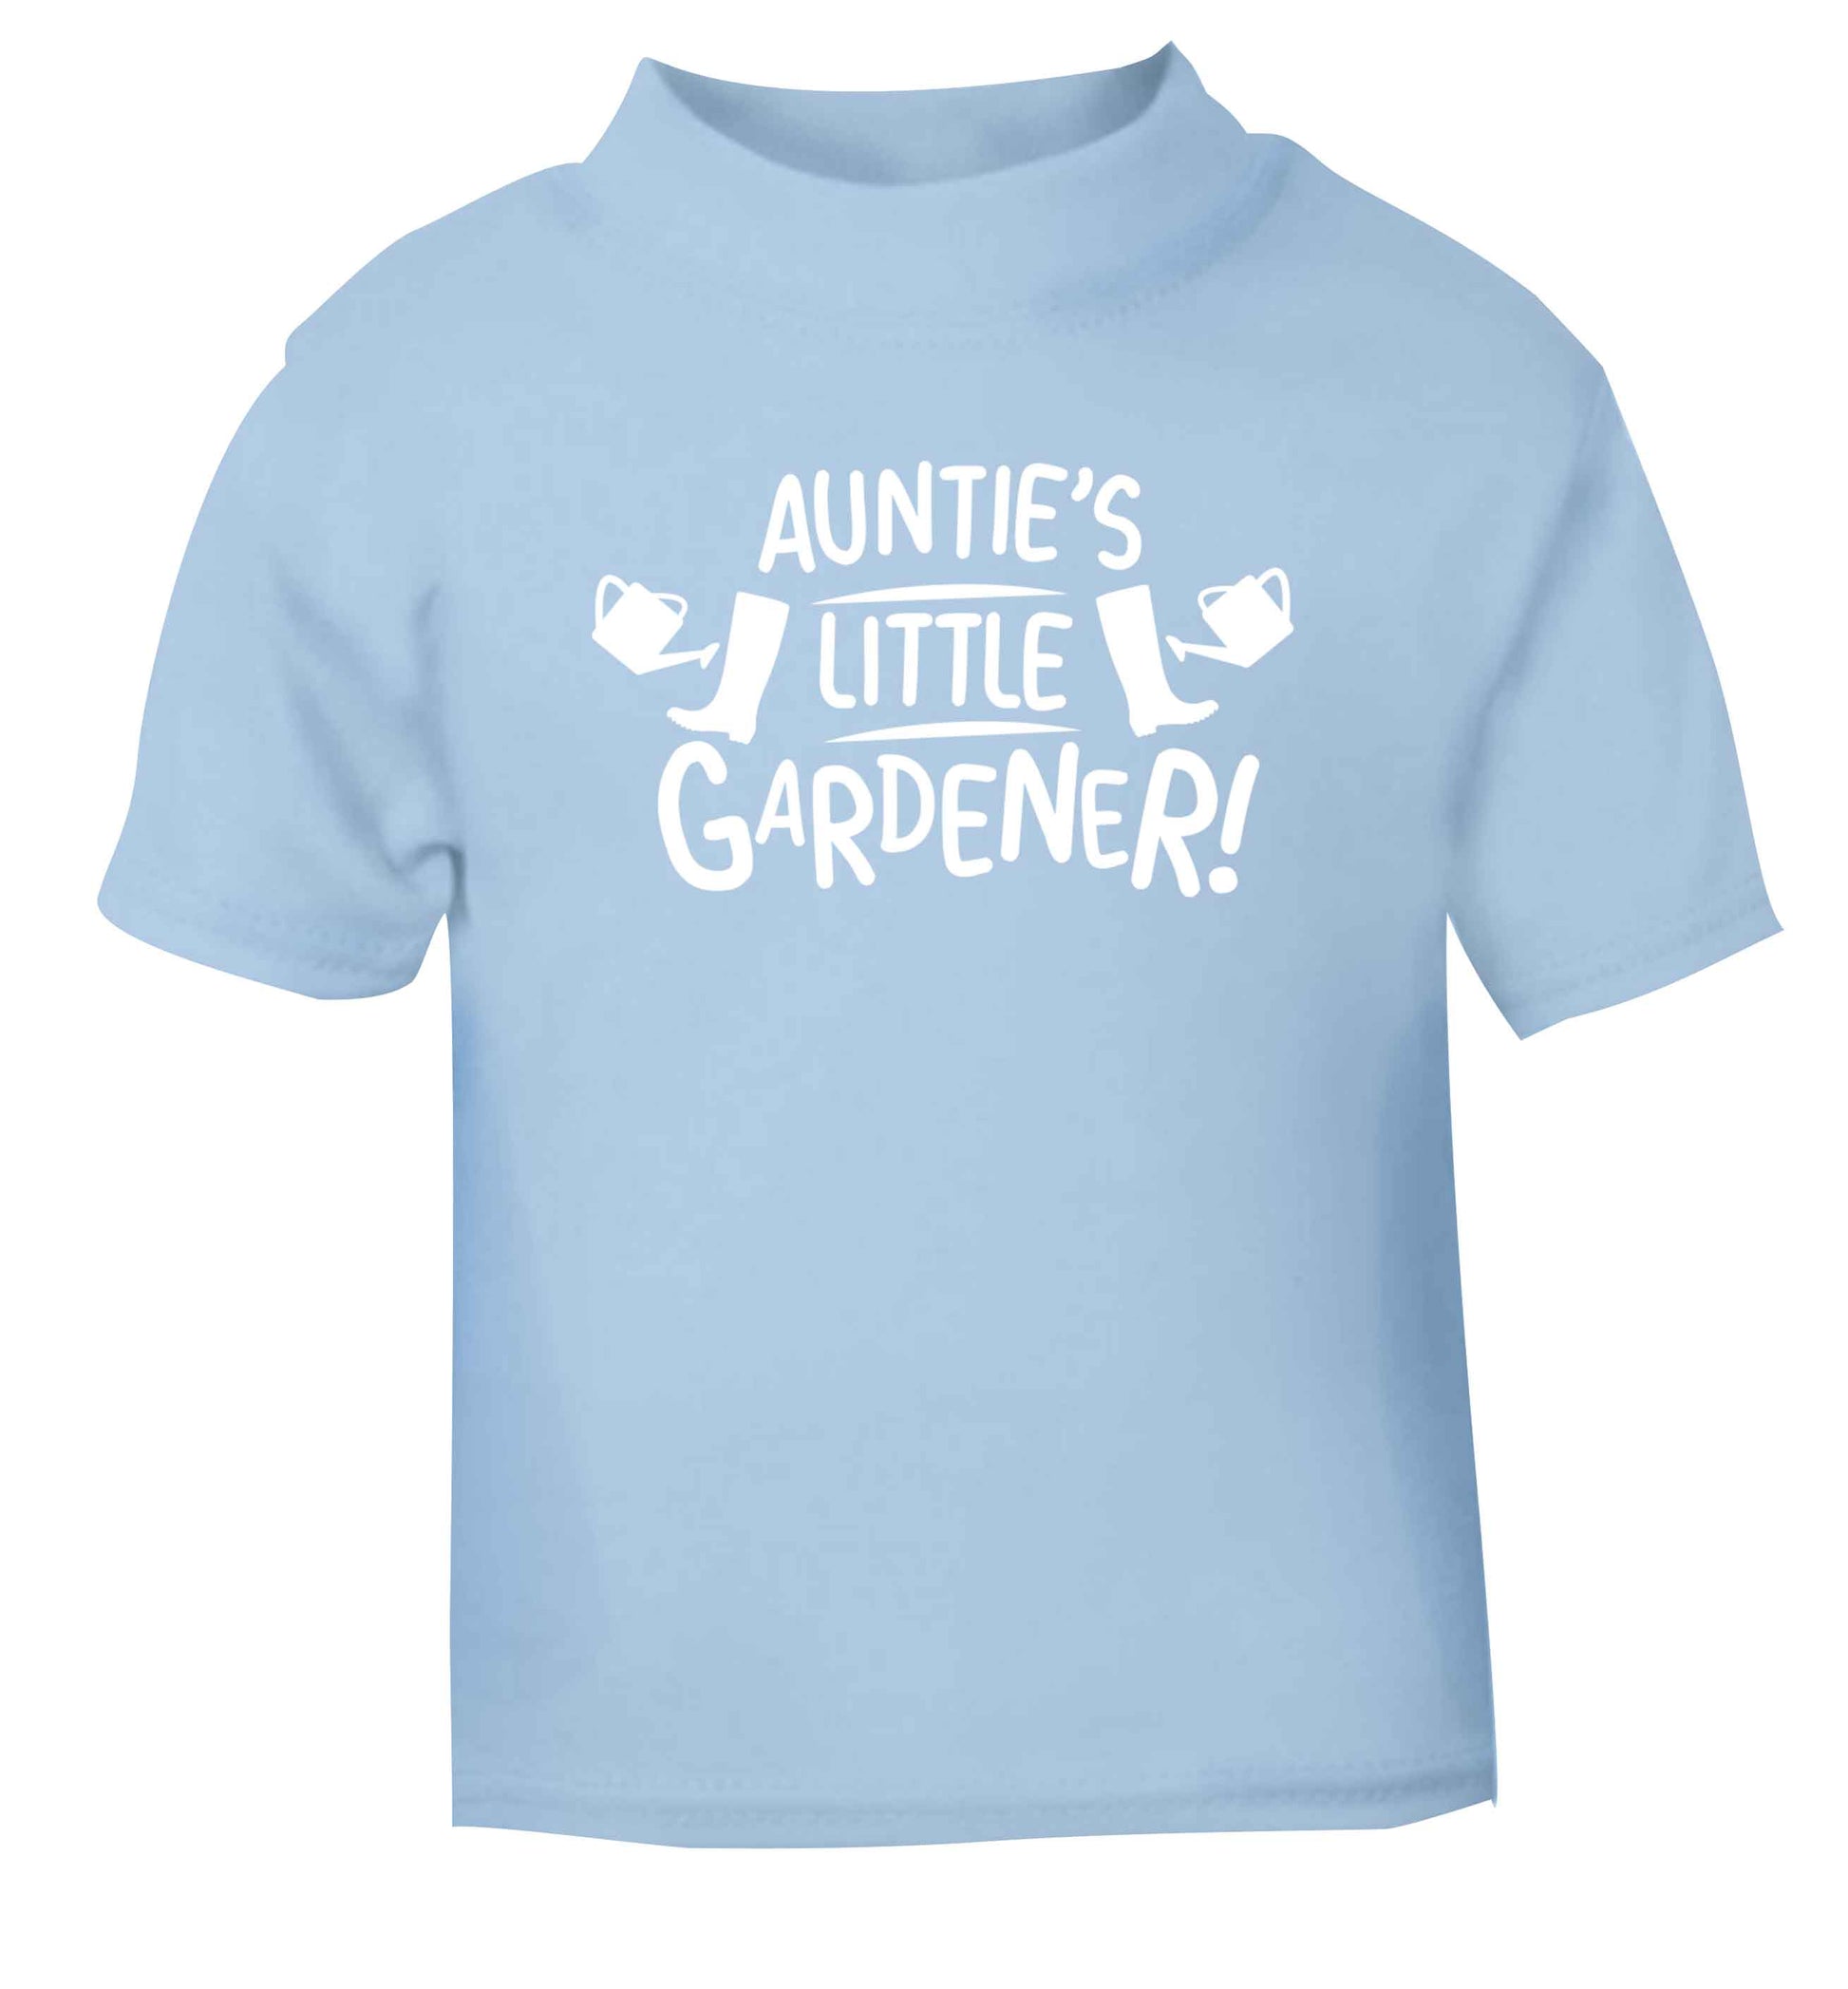 Auntie's little gardener light blue Baby Toddler Tshirt 2 Years